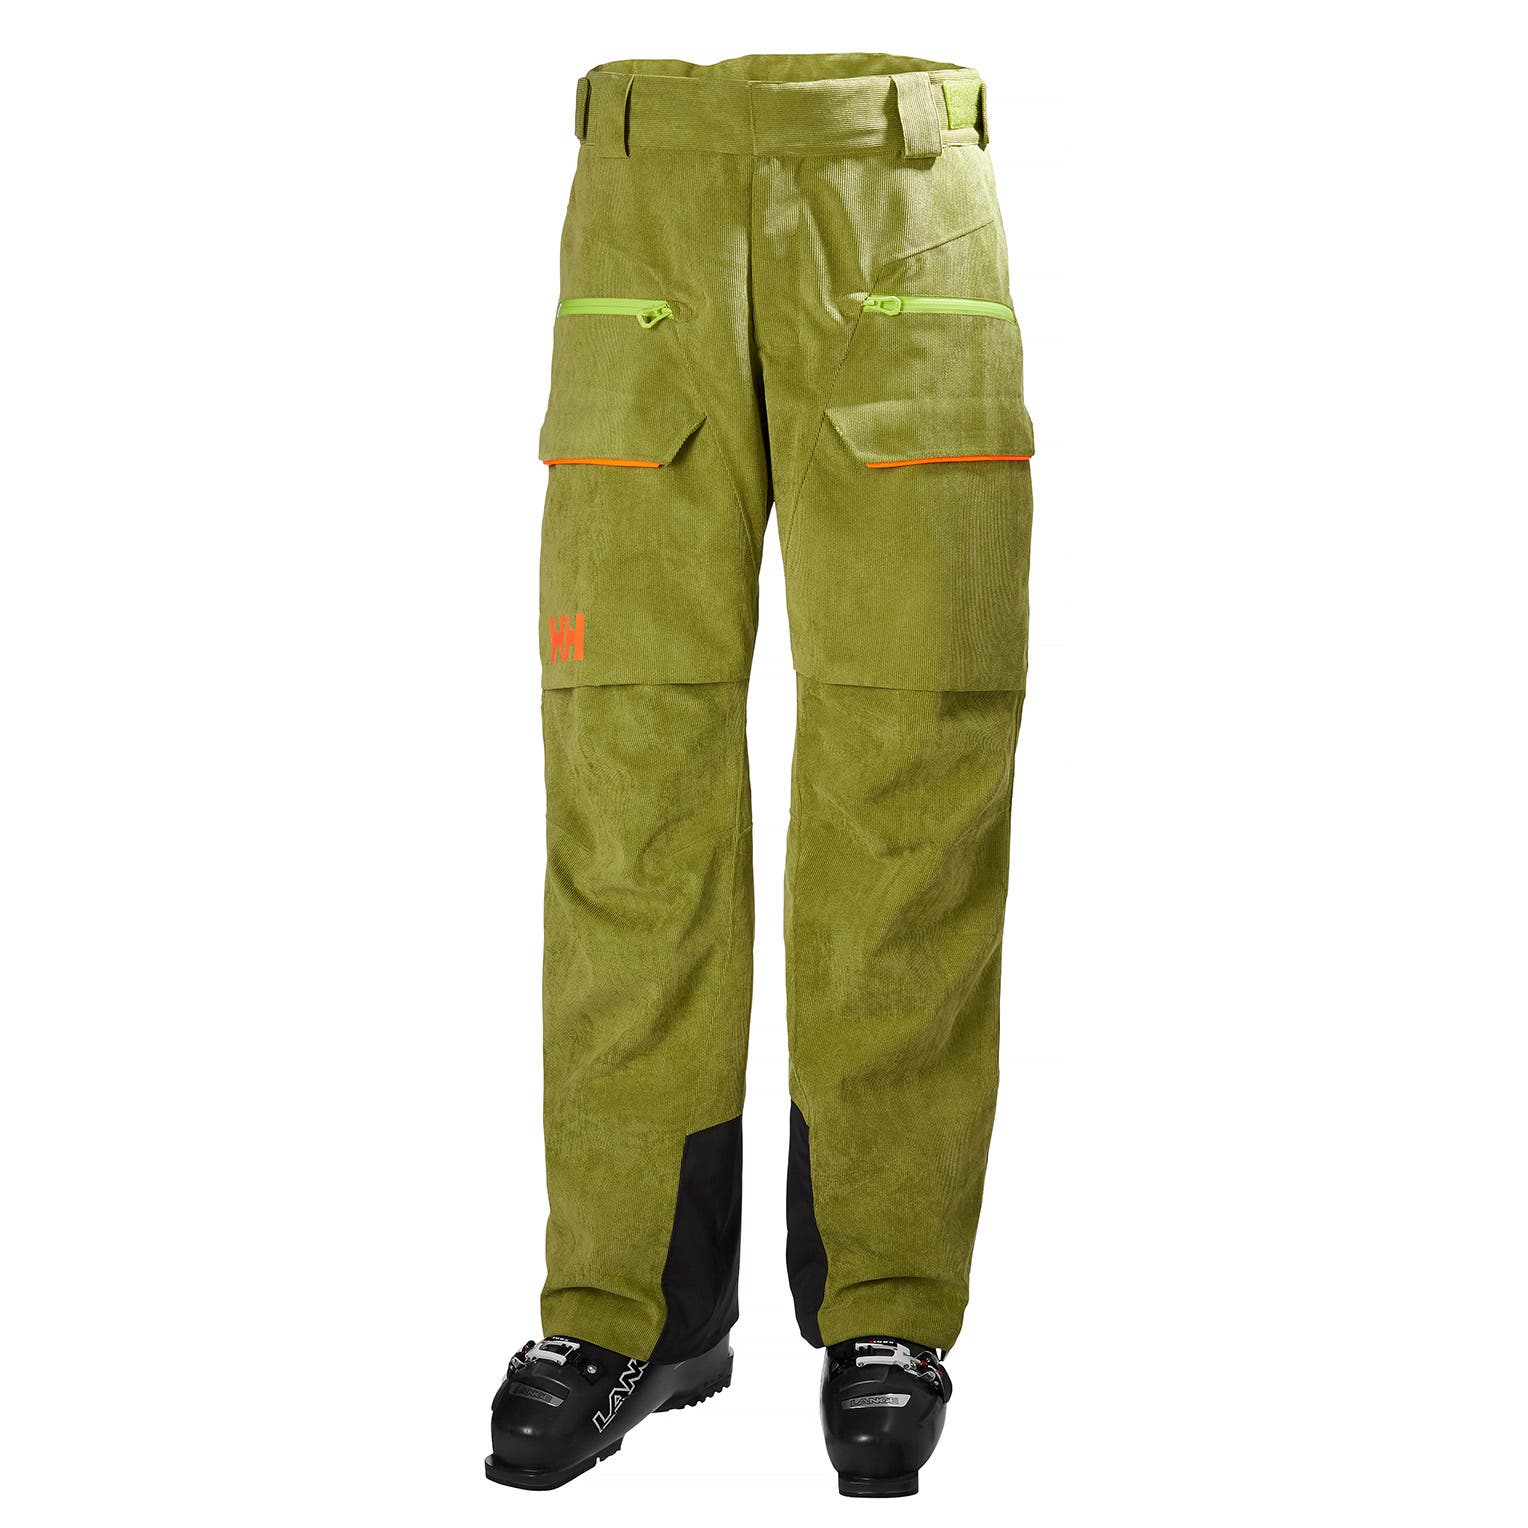 Helly Hansen Garibaldi Pant - Ski pants - Men's